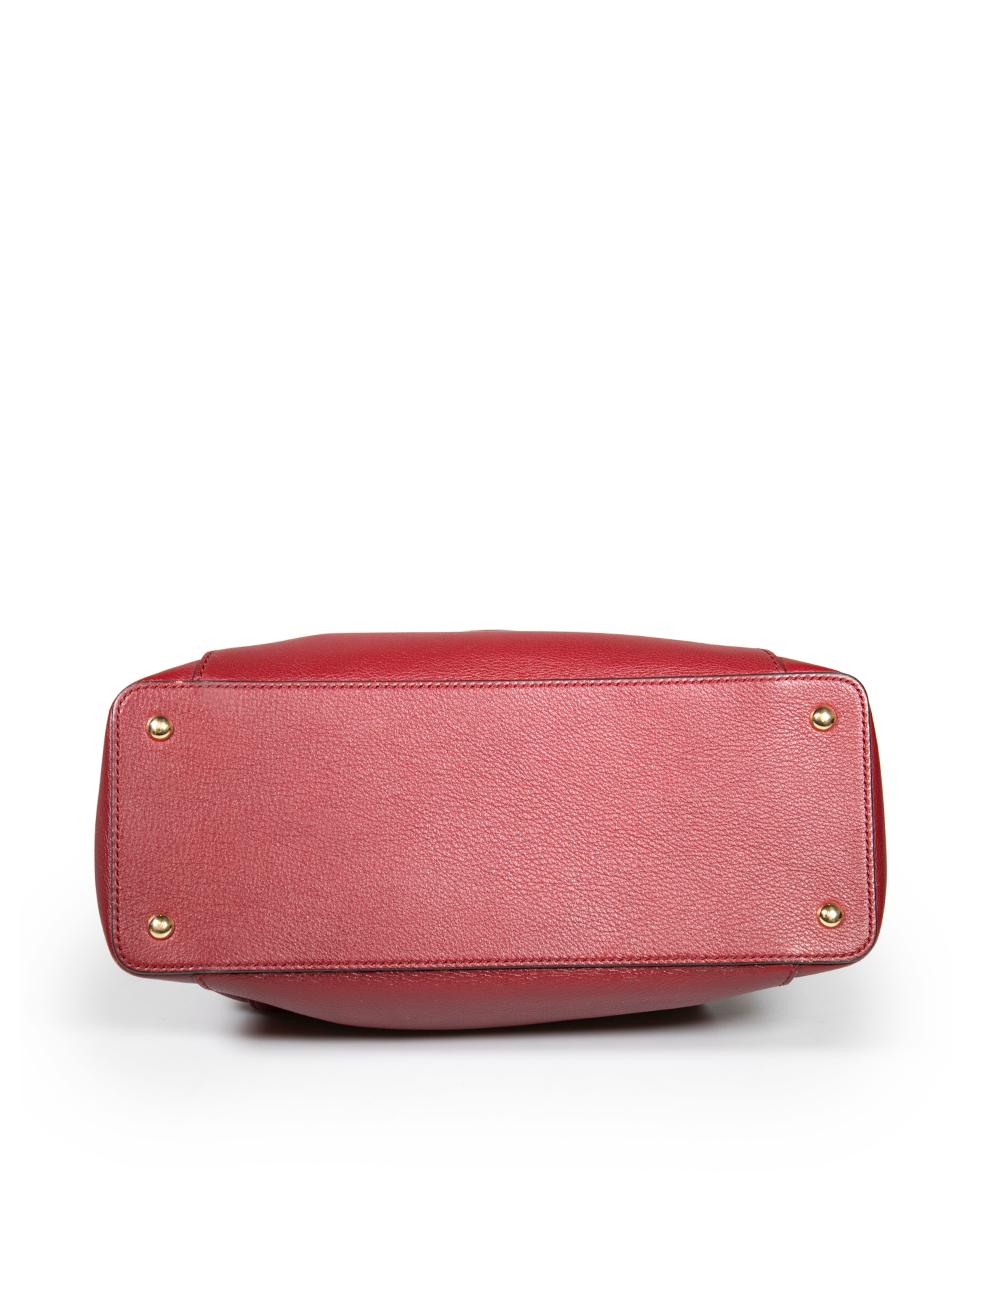 Women's Cartier Red Leather C de Cartier Handbag For Sale